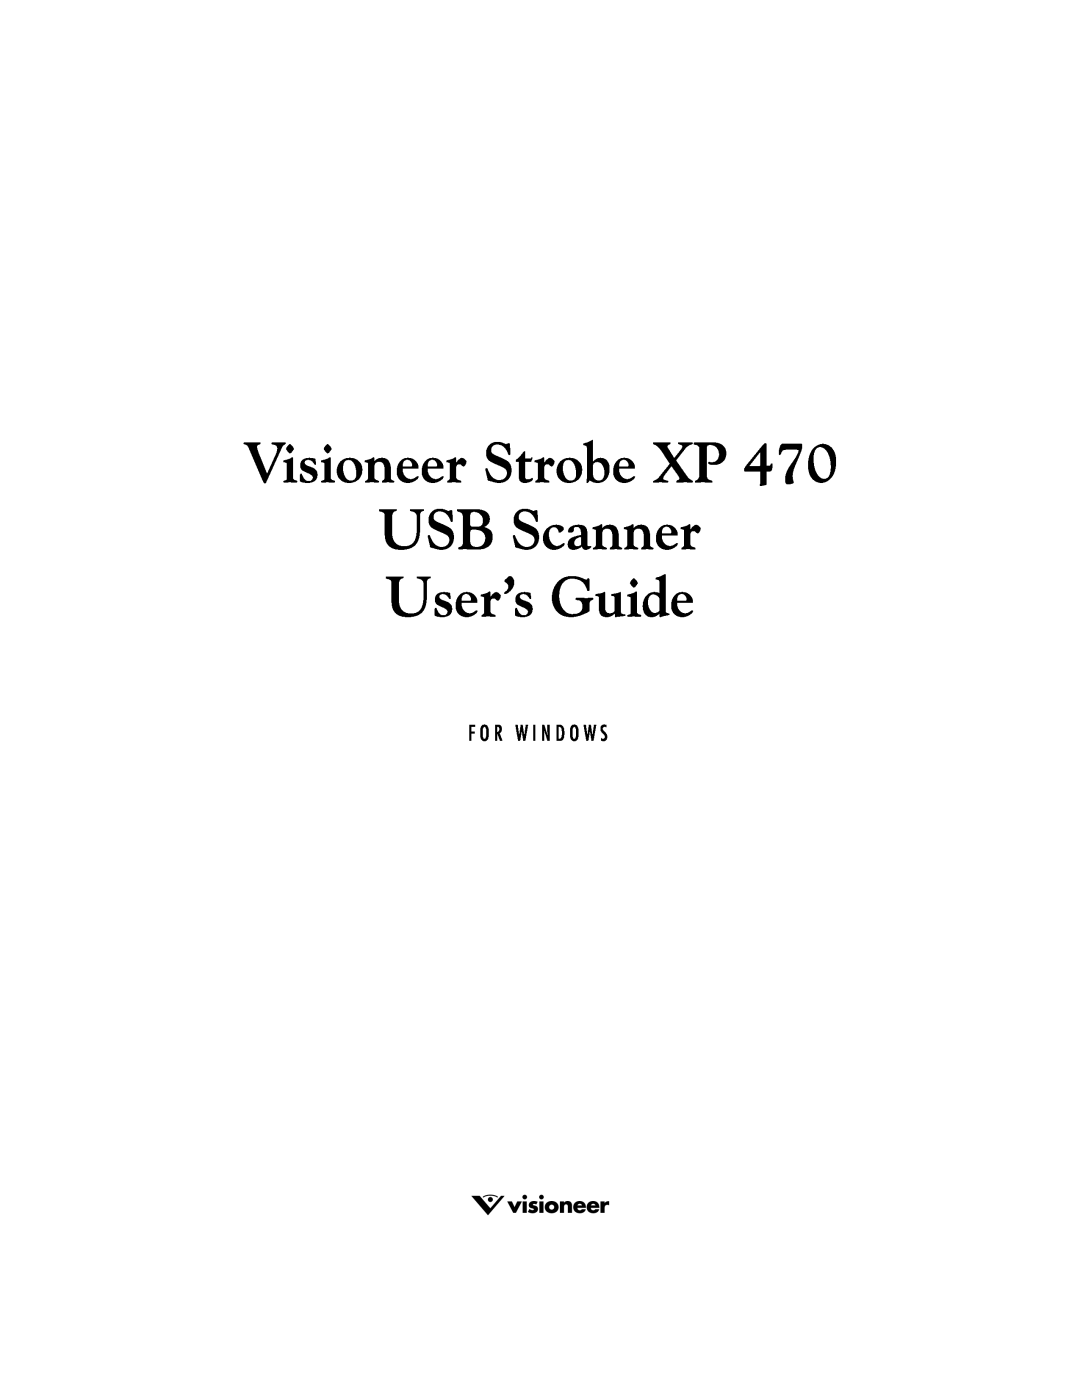 Visioneer XP 470 manual Visioneer Strobe XP USB Scanner User’s Guide, F O R W I N D O W S 